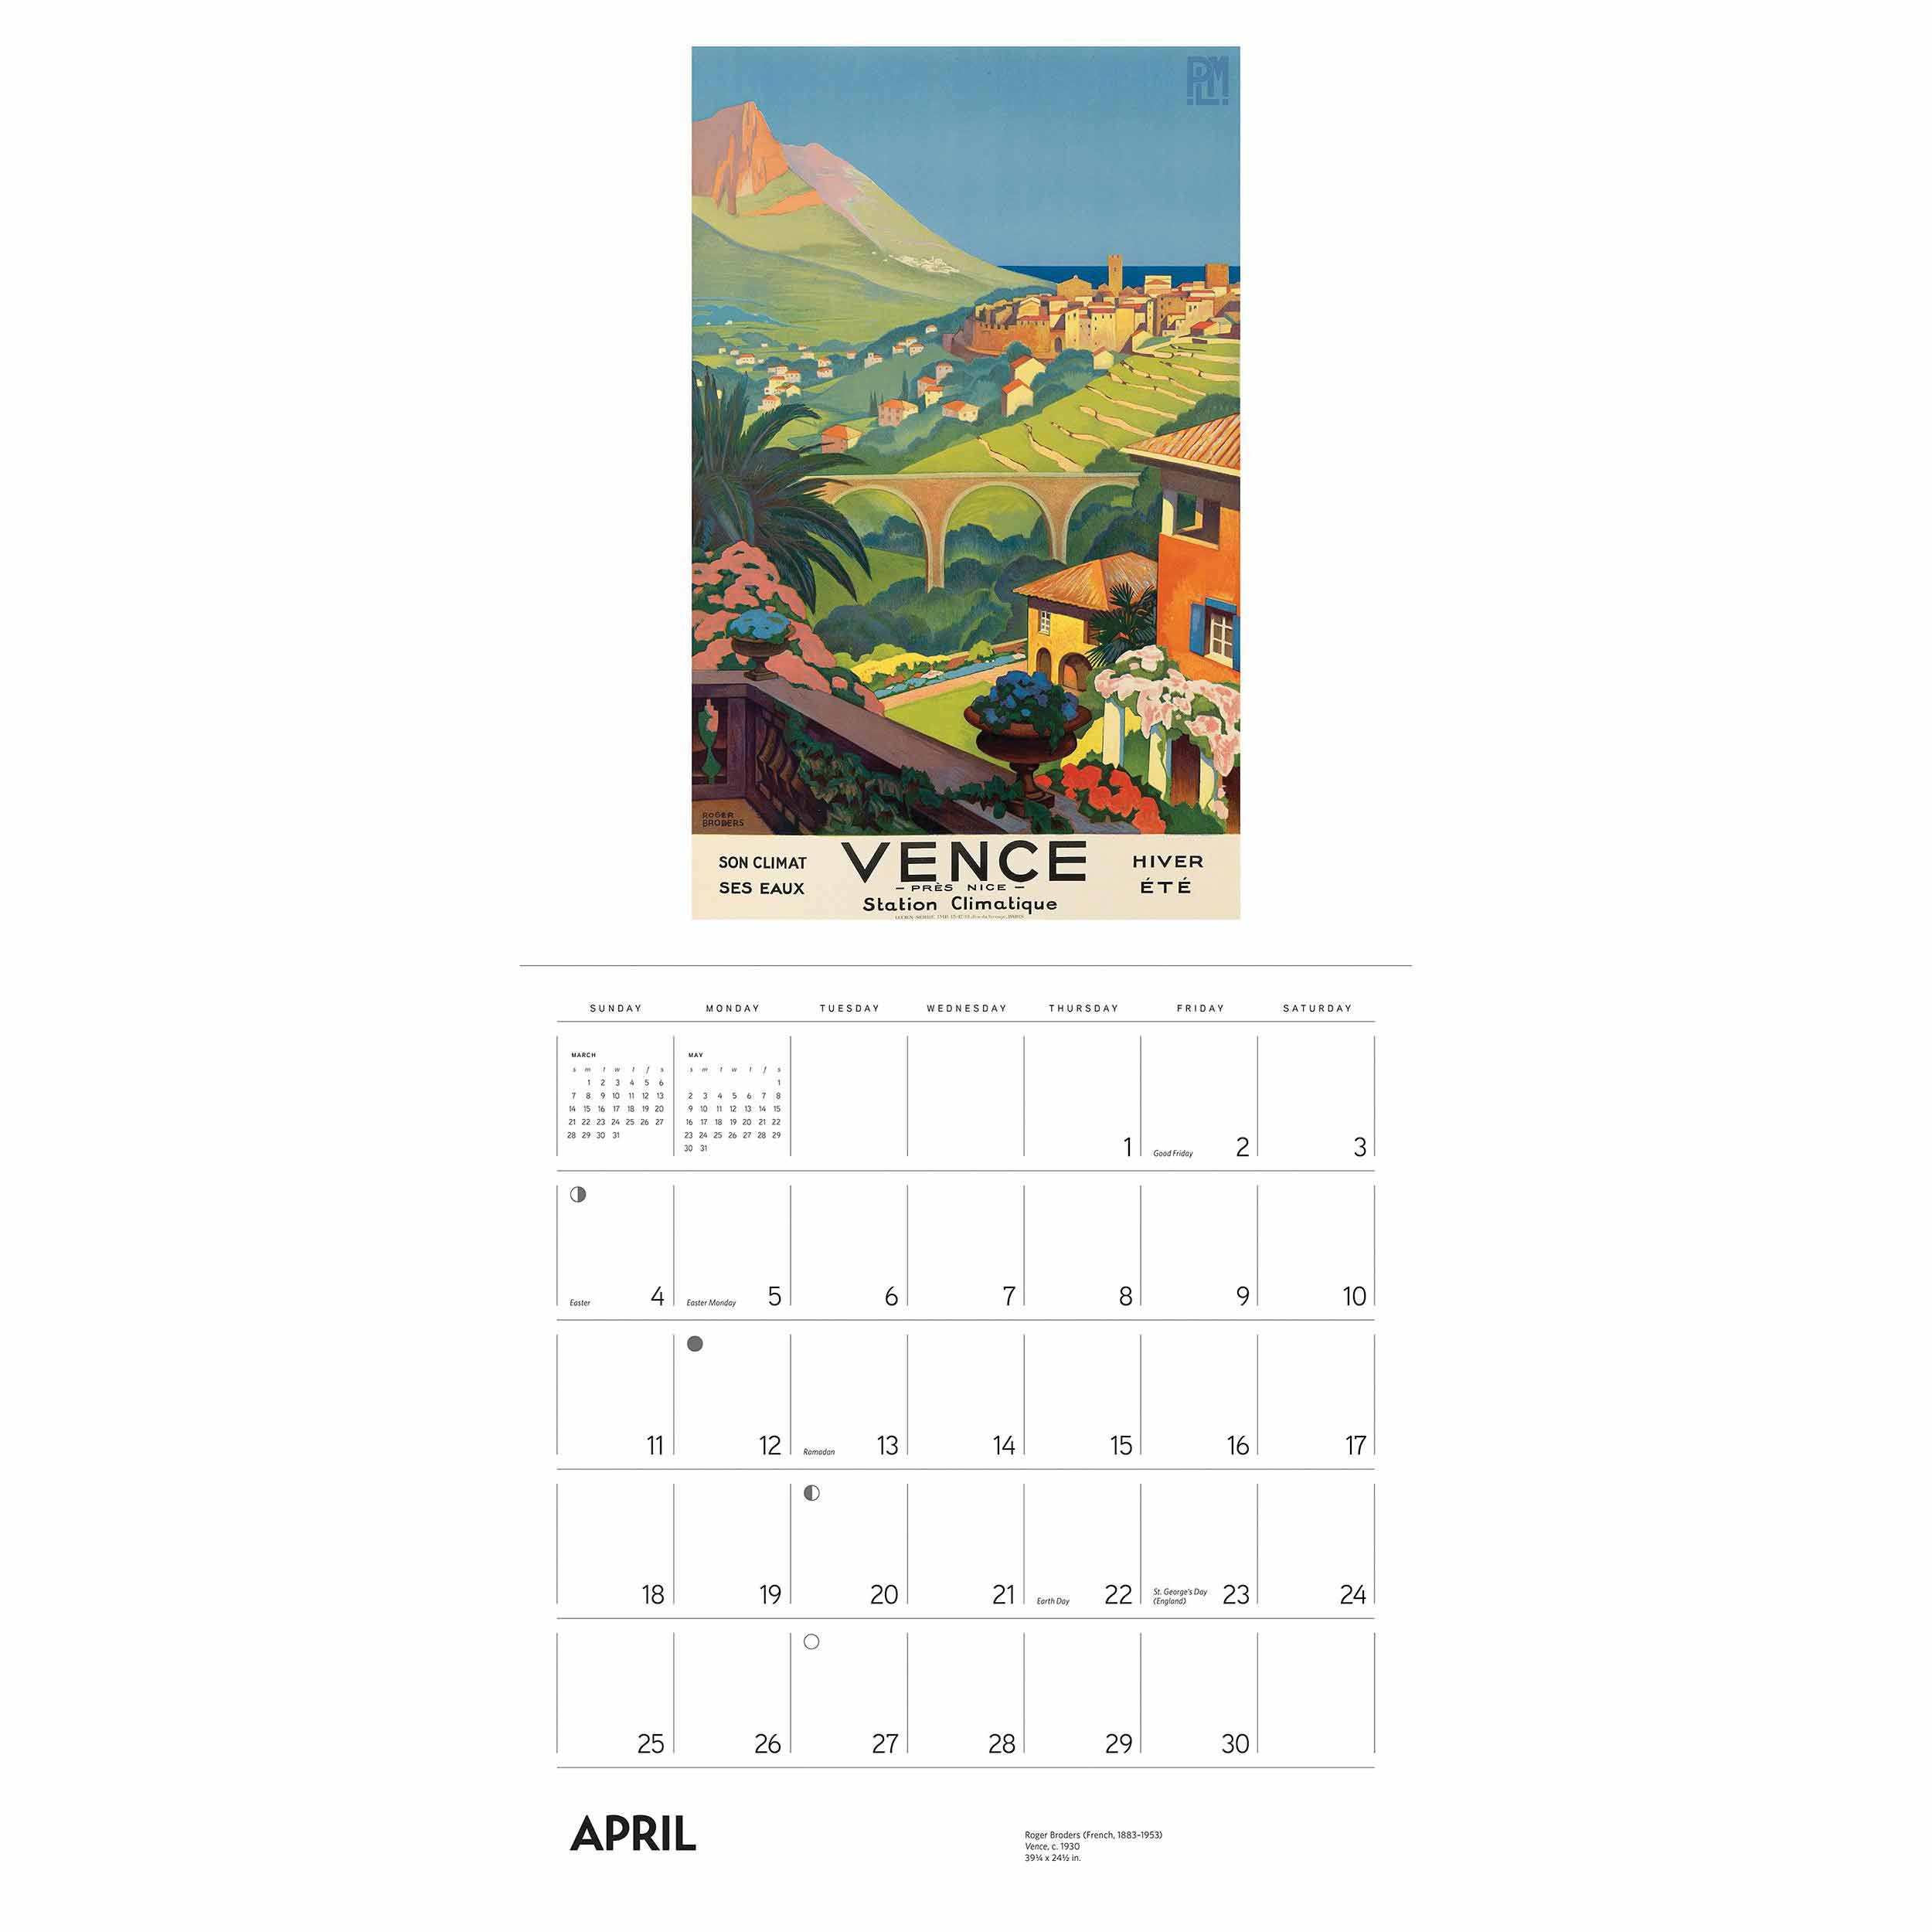 France, Vintage Travel Posters Calendar 2021 At Calendar Club-Calandar 2021 Vacation